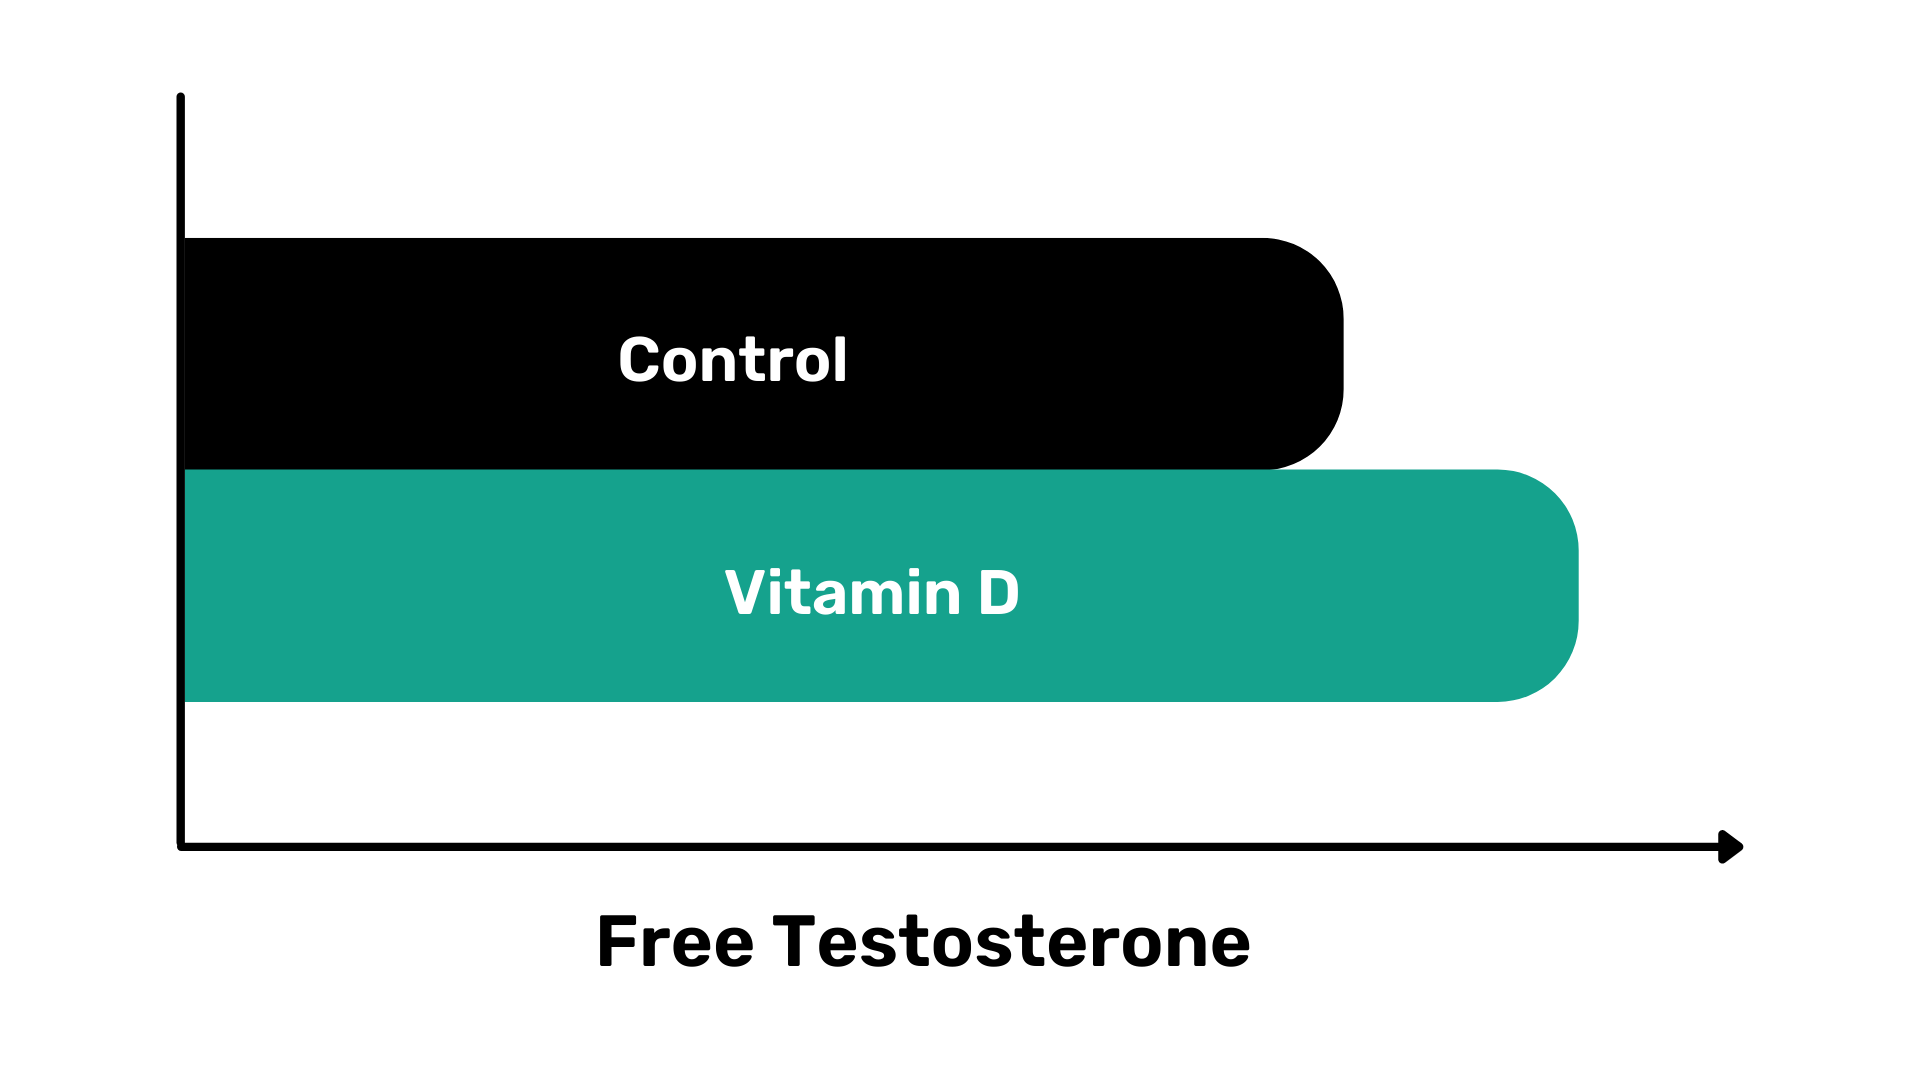 free testosterone, vitamin d, vitamin d supplements